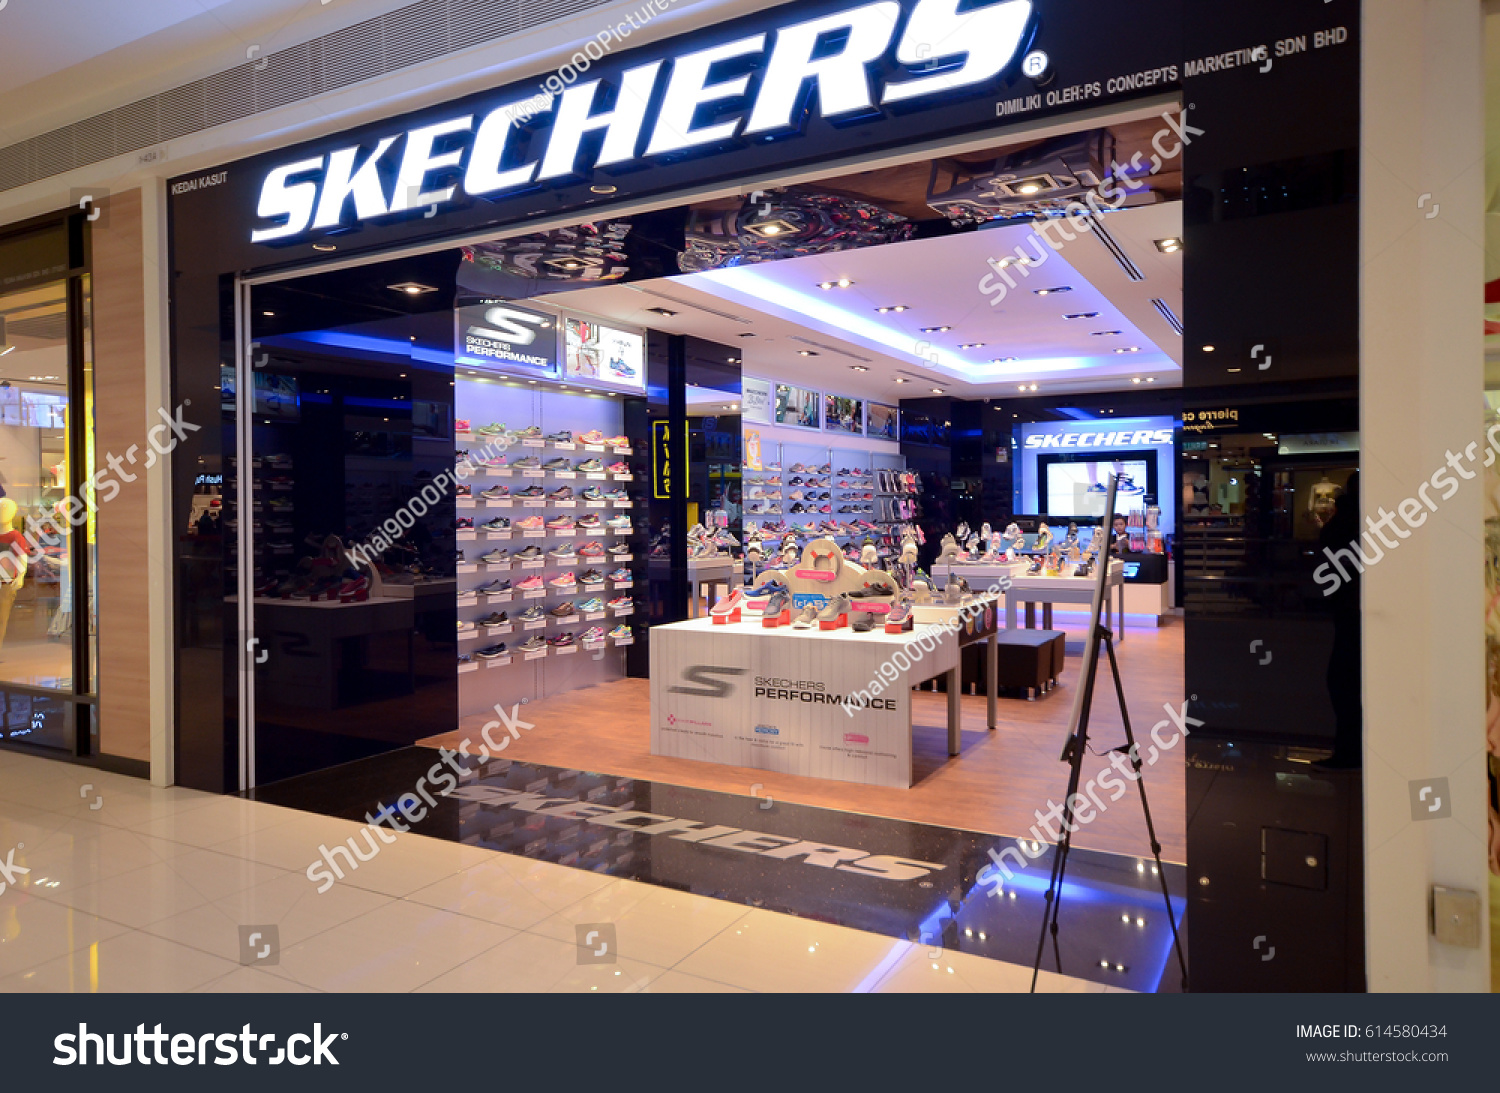 who sells skechers